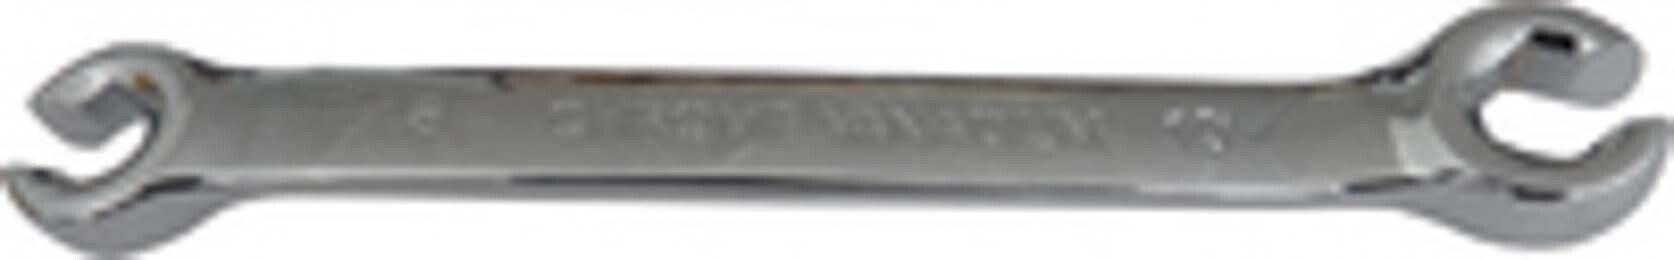 Couteau inox n°9 ' ' s/carte OPINEL - 17673